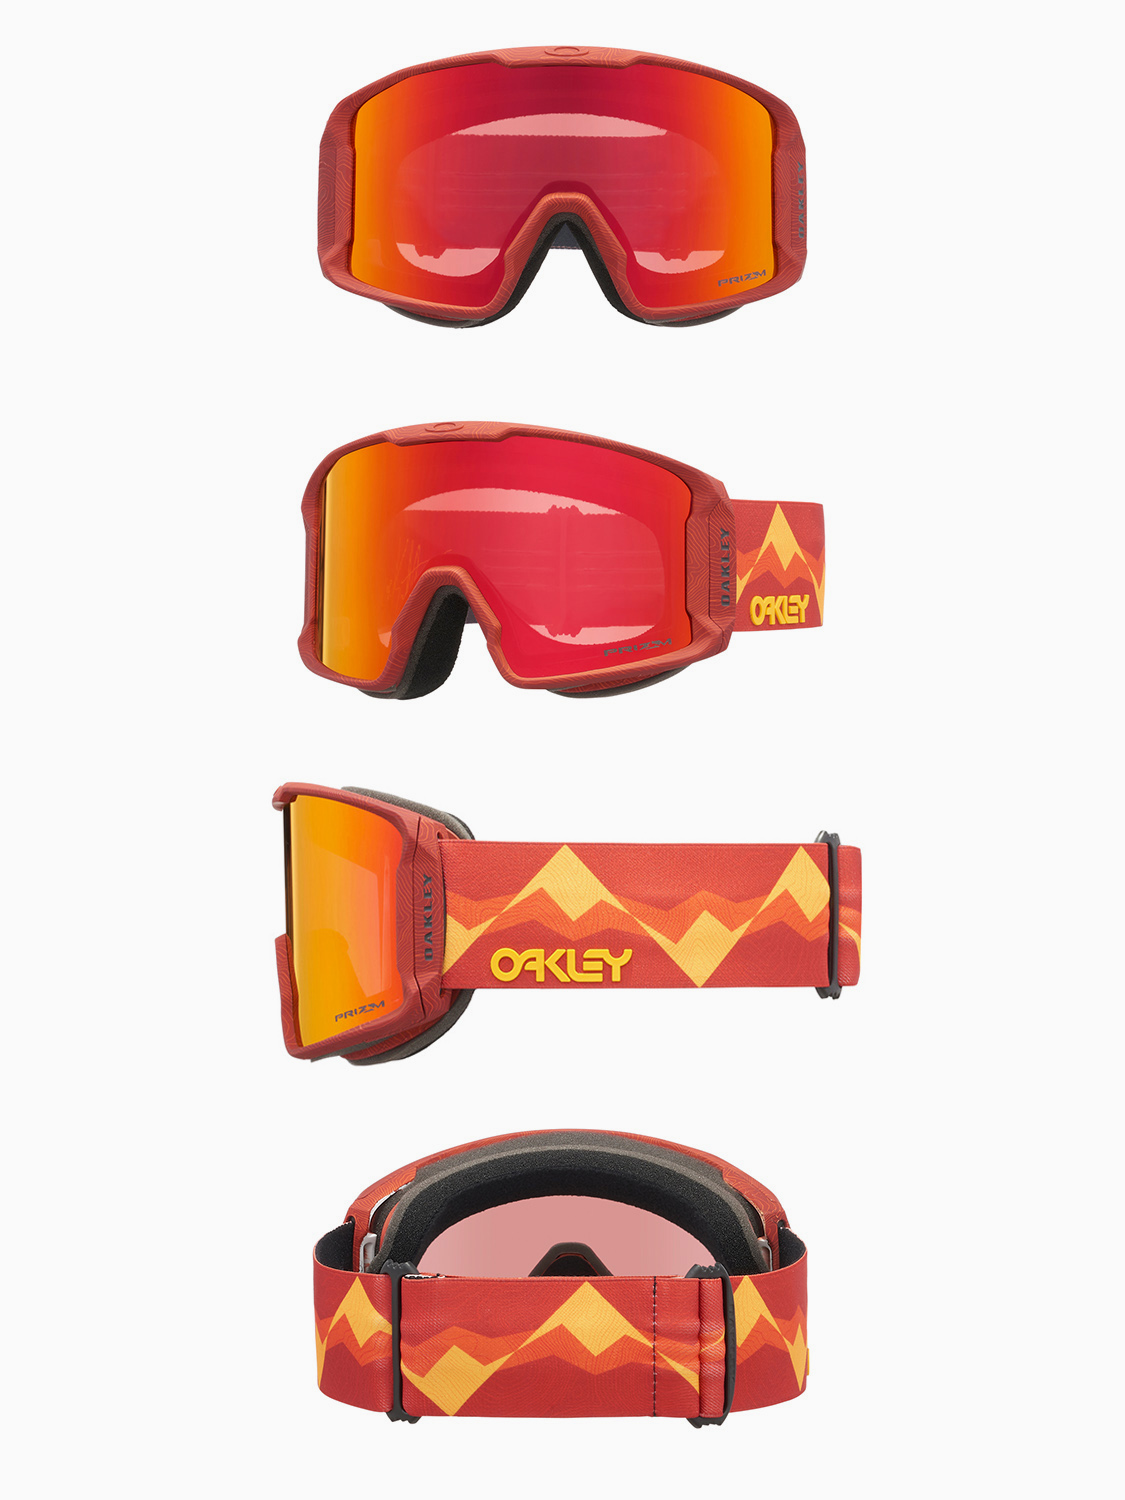 oakley-ski-glasses-ecommerce-andrea-agrati-fotografo